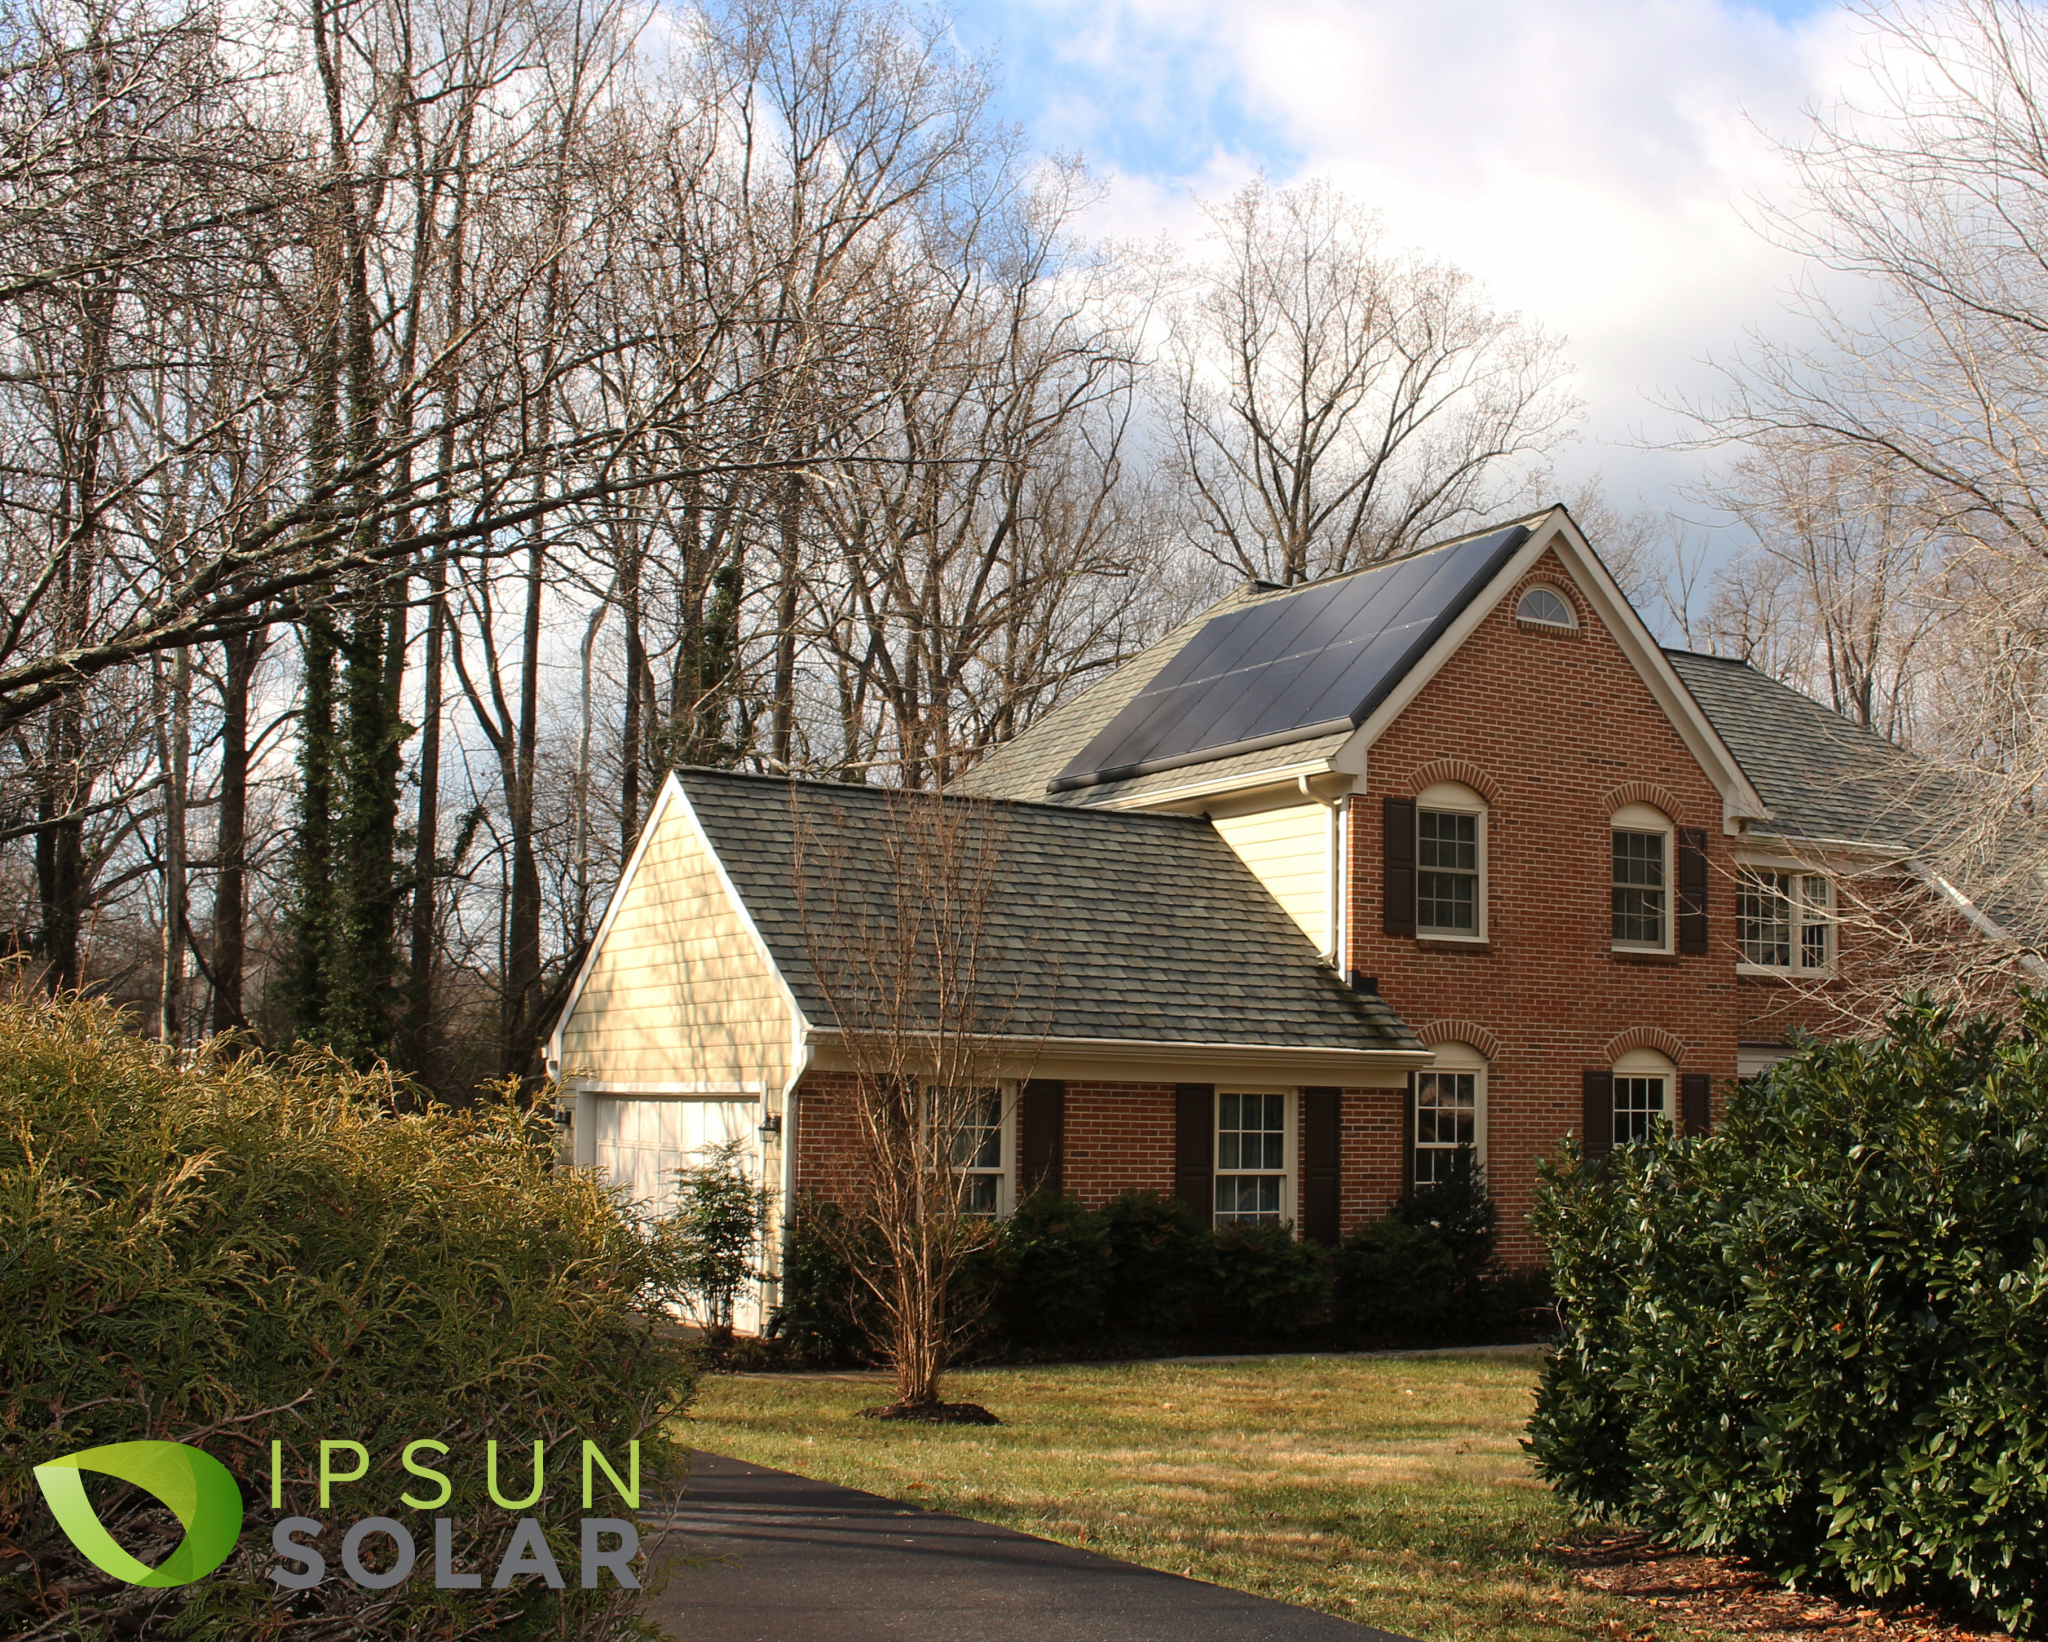 Solar panels in MClean, VA